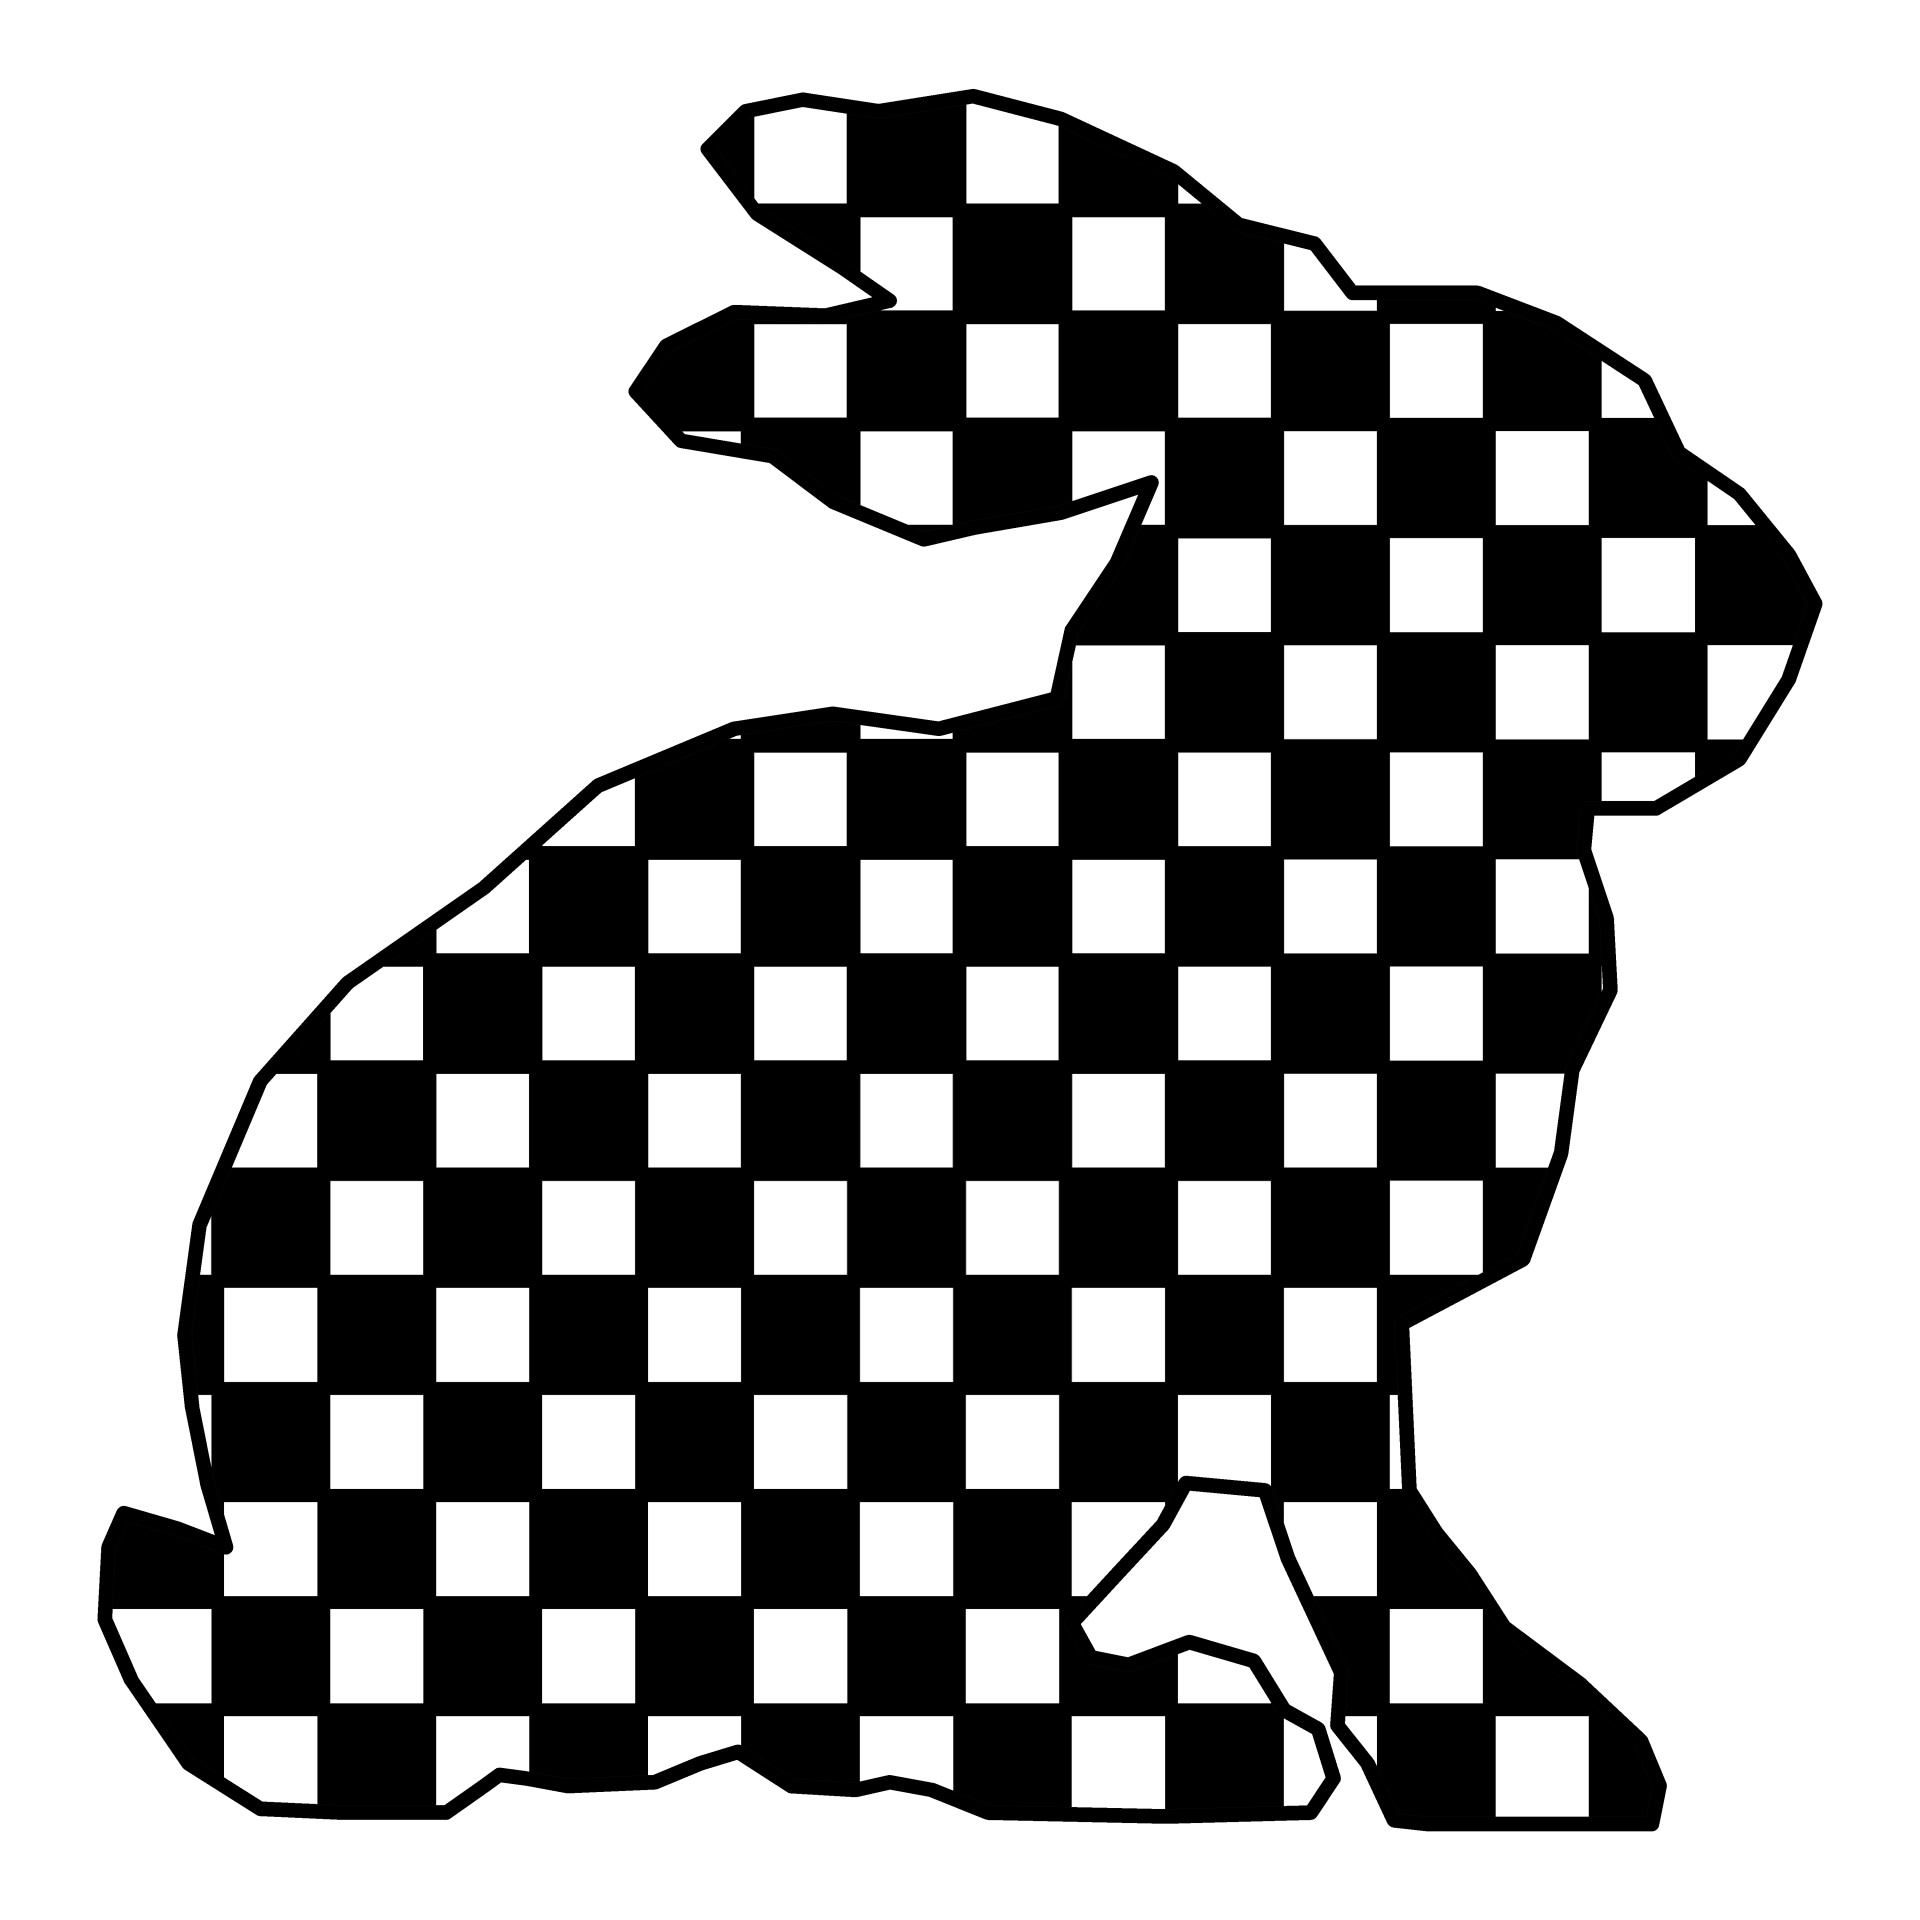 drawing checker rabbit free photo